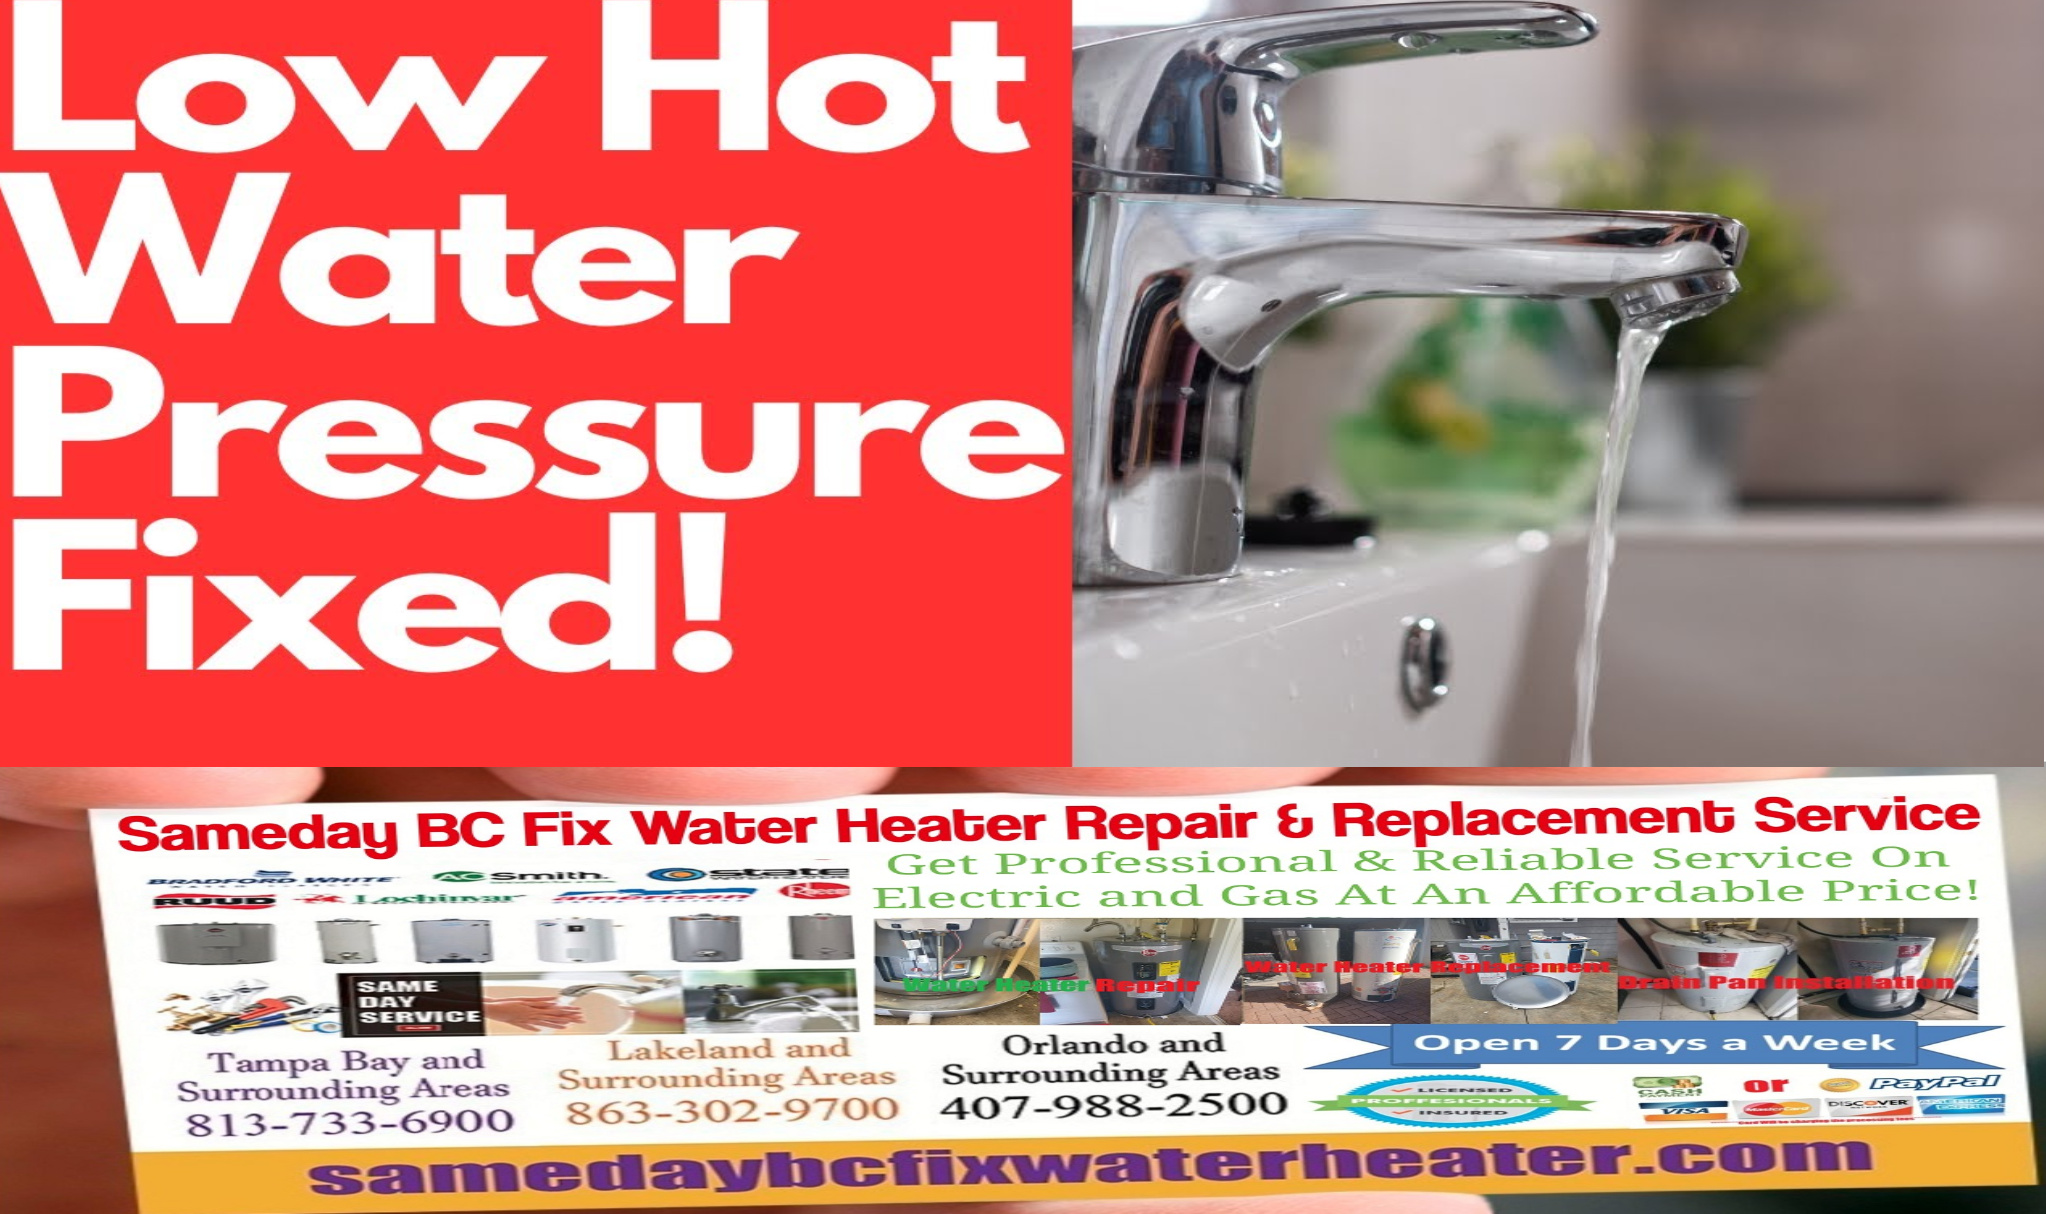 water heater low water pressure, low hot water pressure after replacing water heater Service Near Me